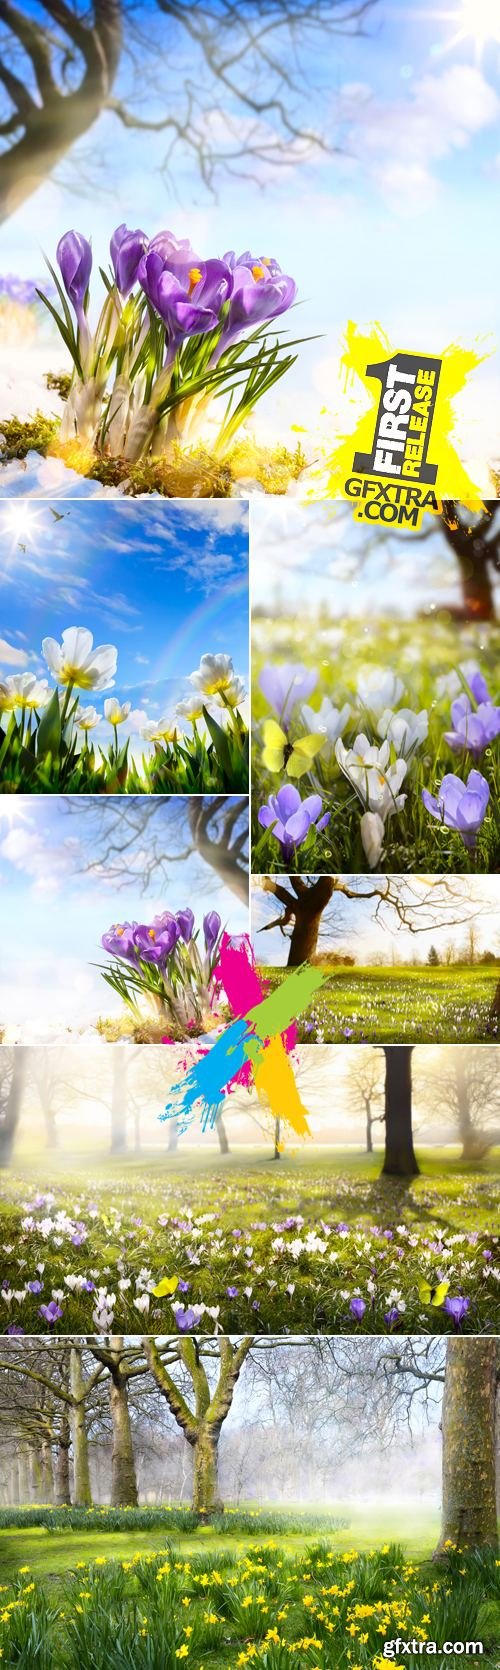 Stock Photo - Spring Nature 2015